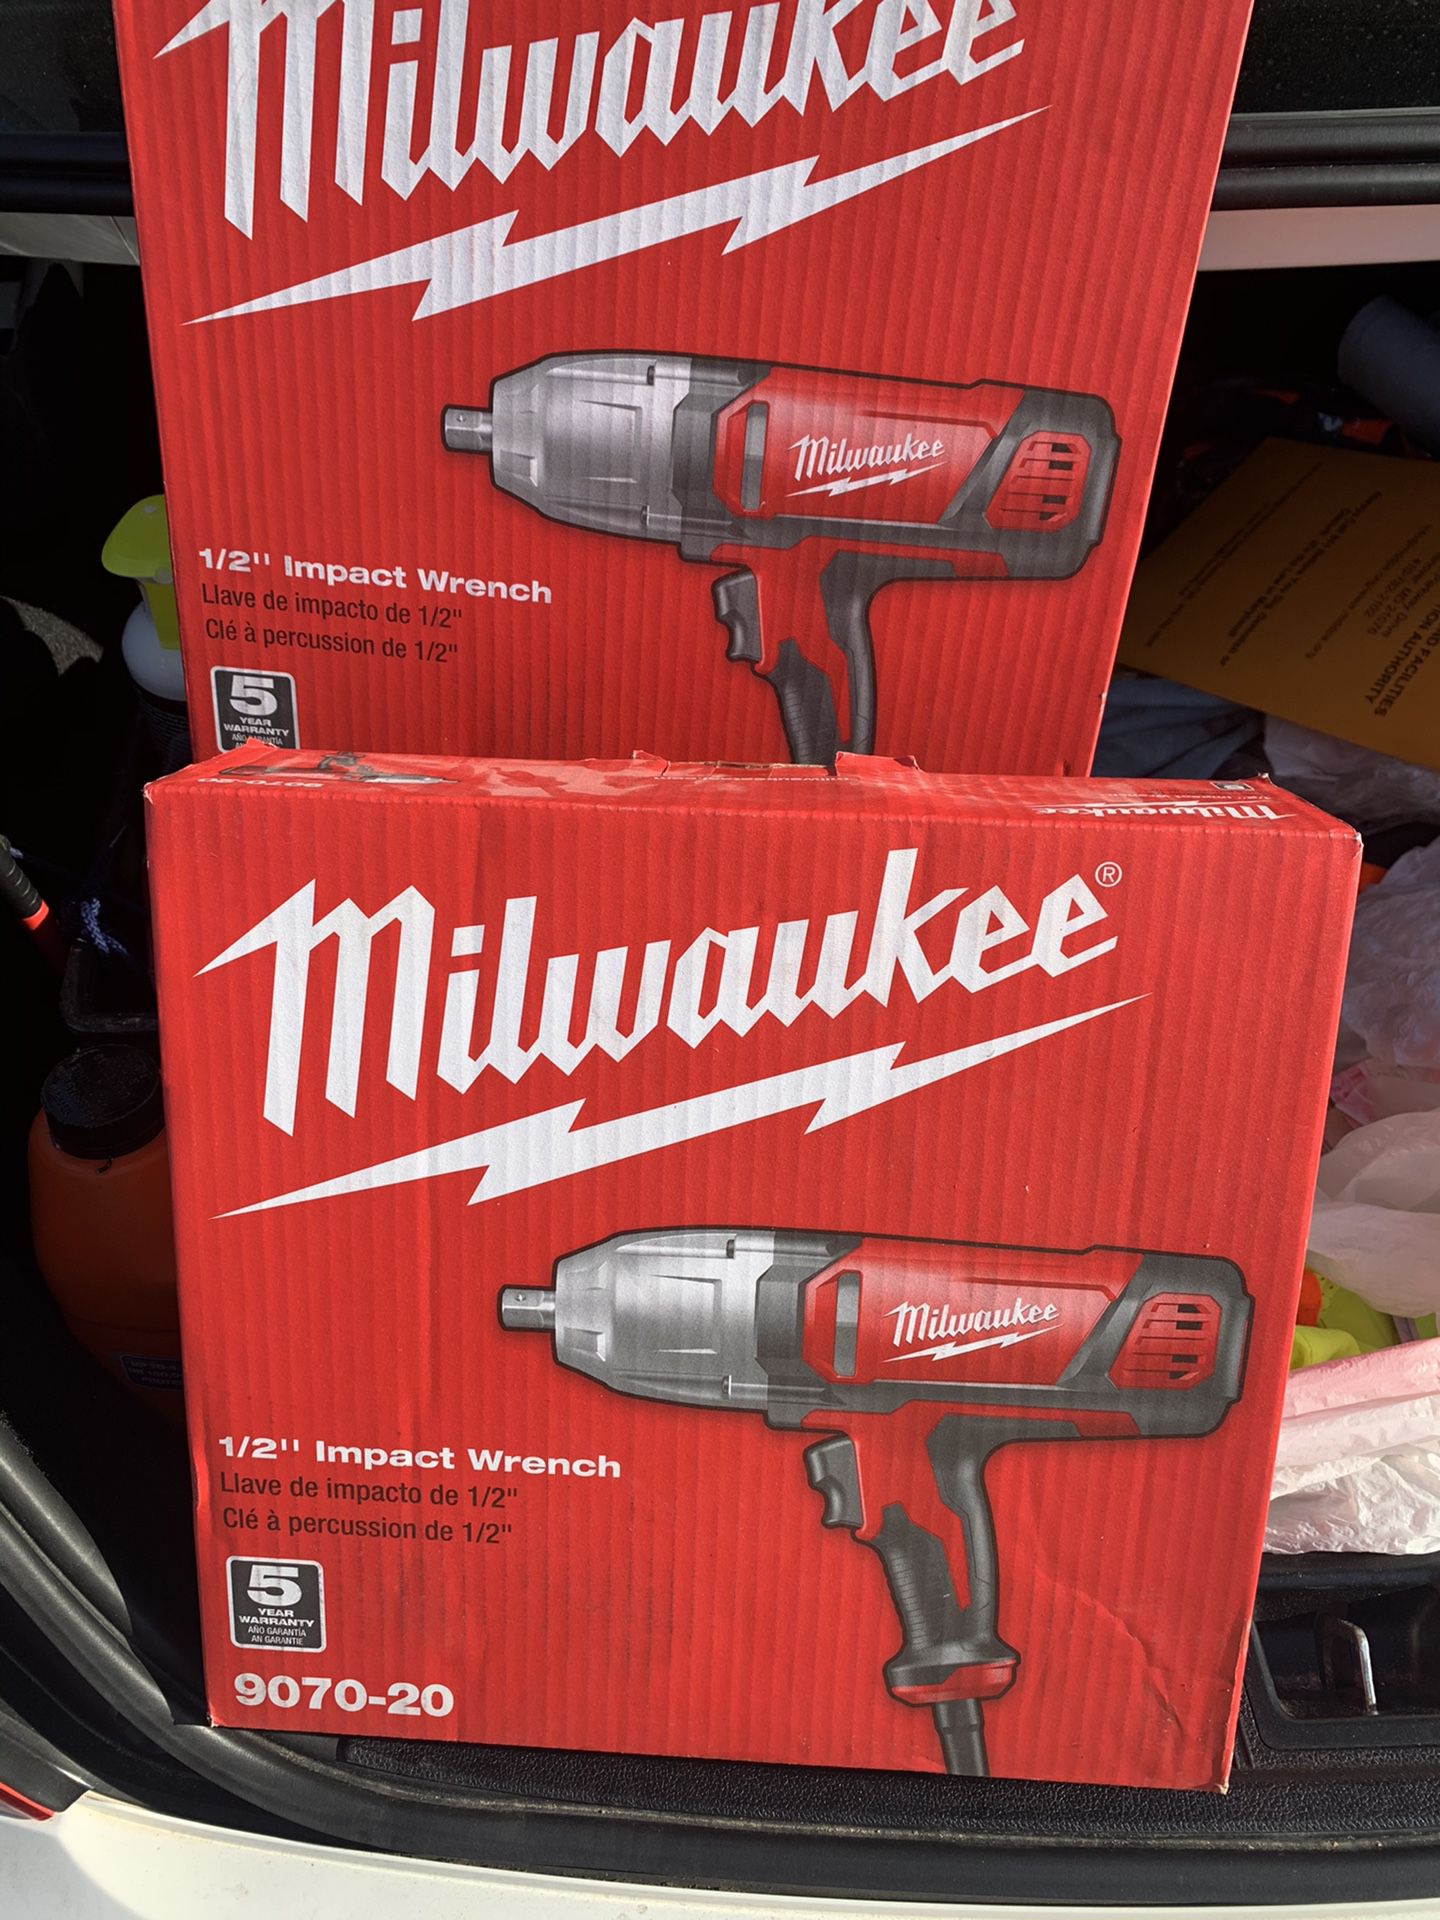 Milwaukee 1/2” impact wrench